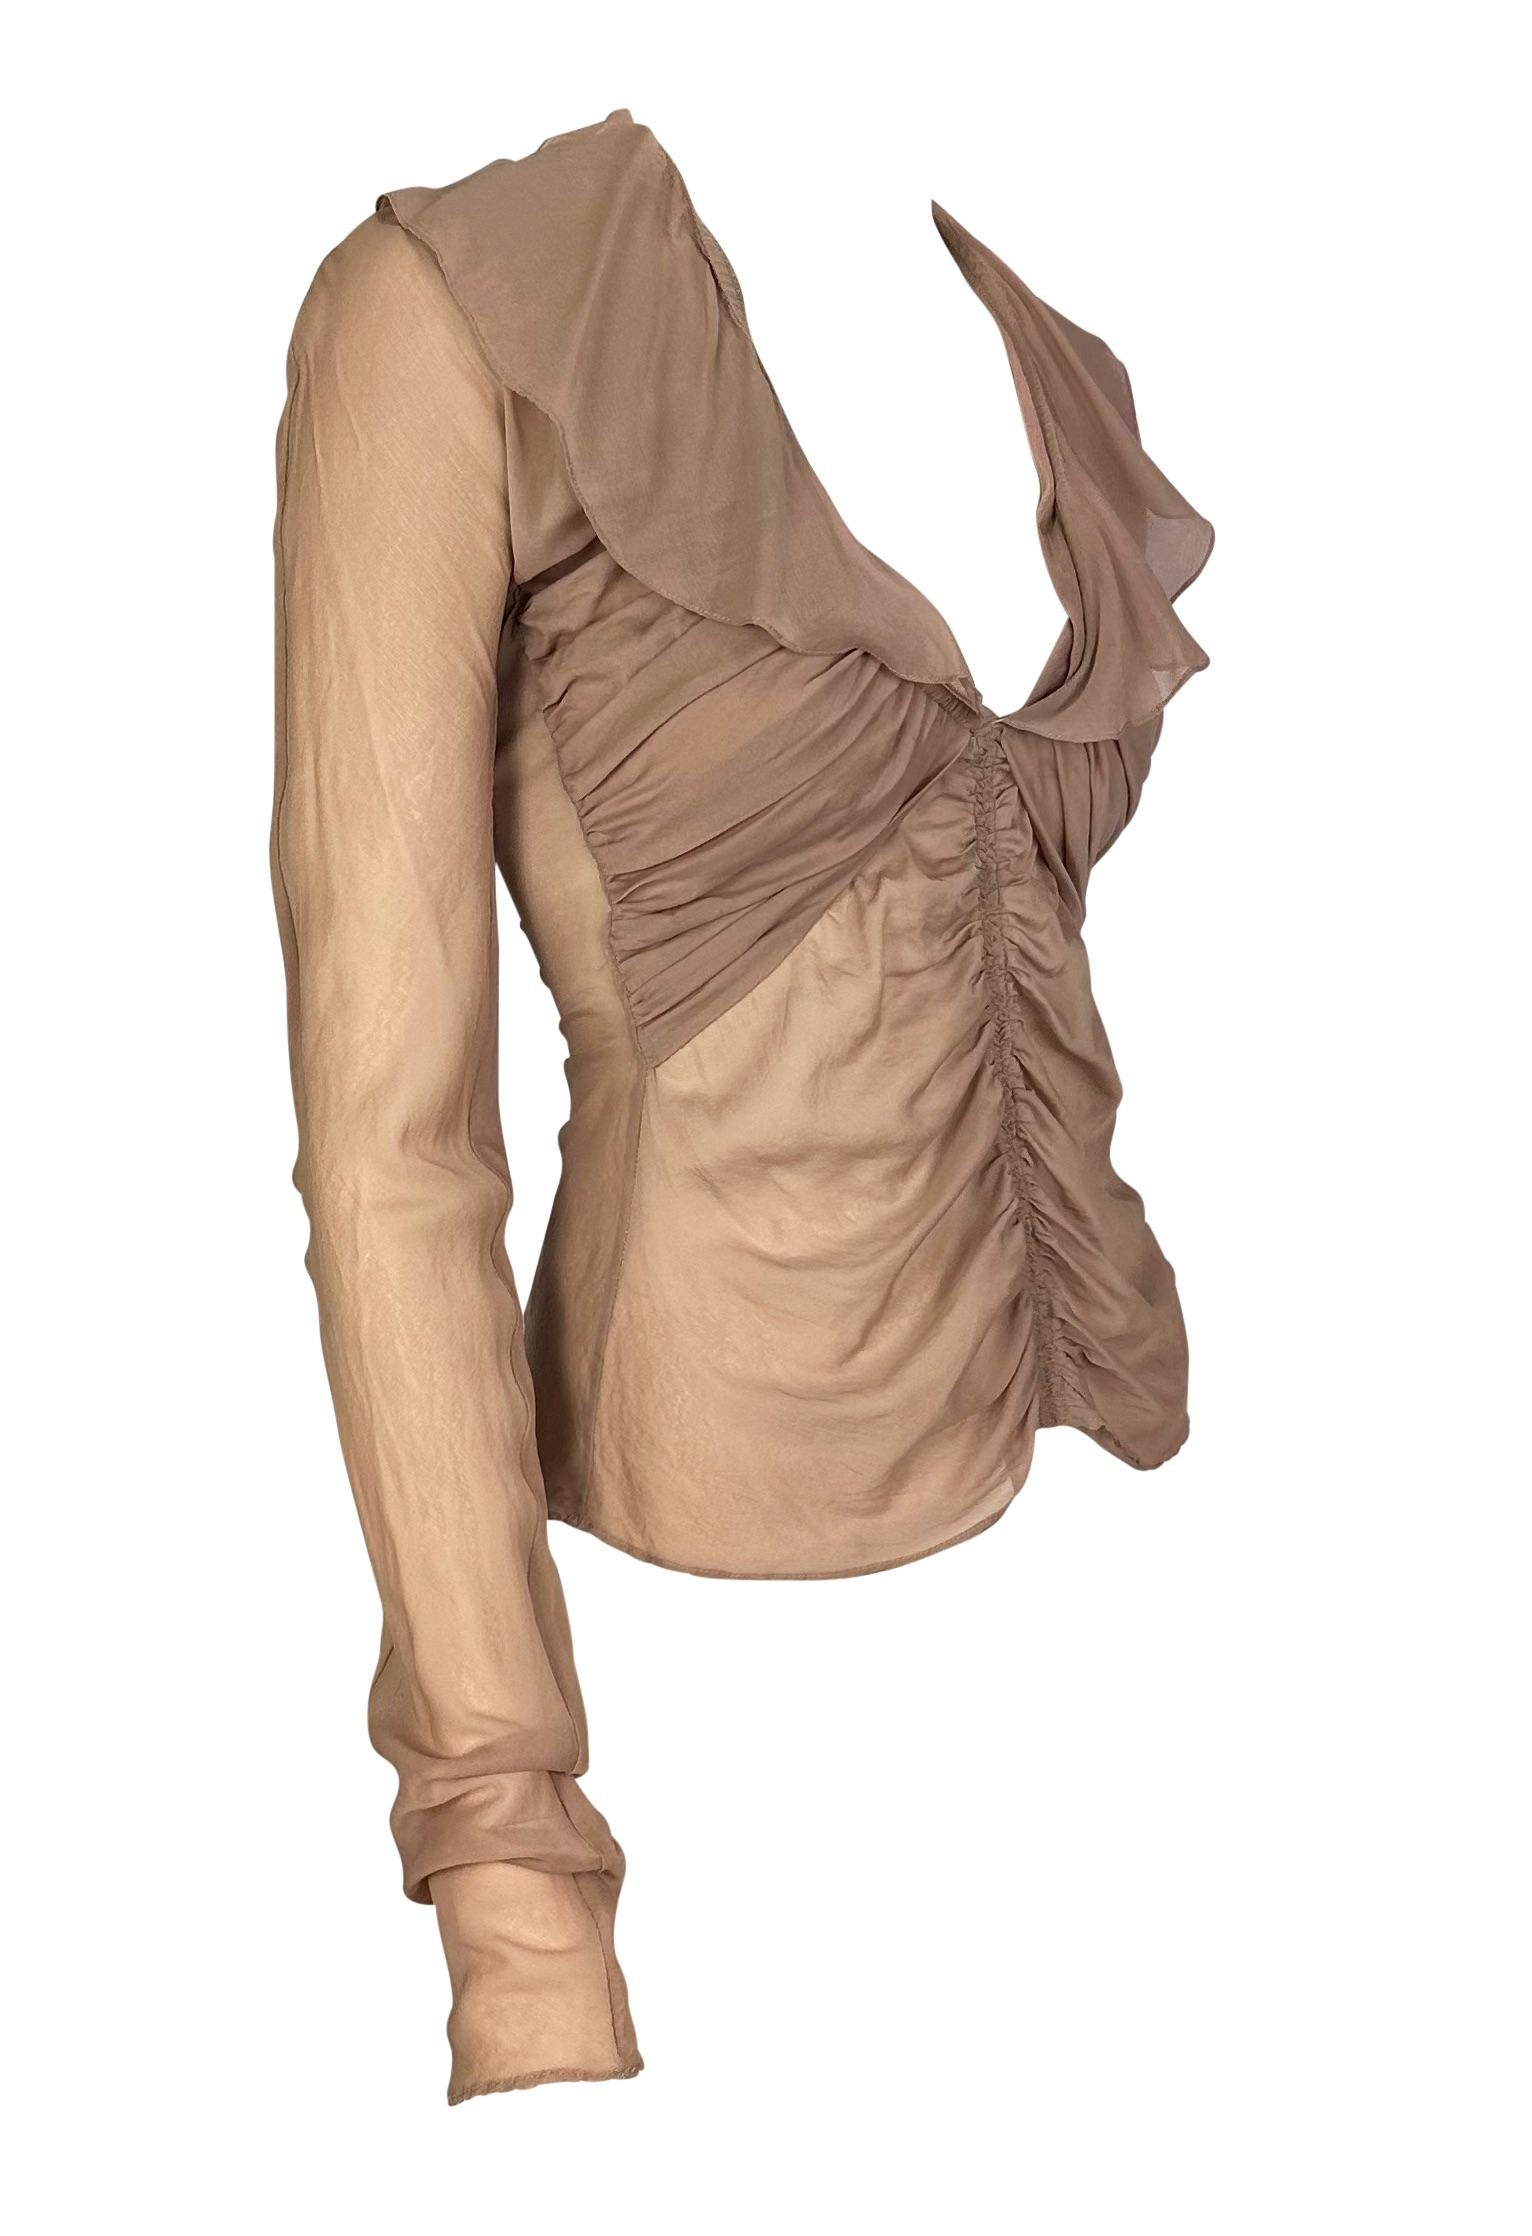 Women's S/S 2003 Gucci by Tom Ford Beige Beige Sheer Longe Sleeve Runway Blouse For Sale